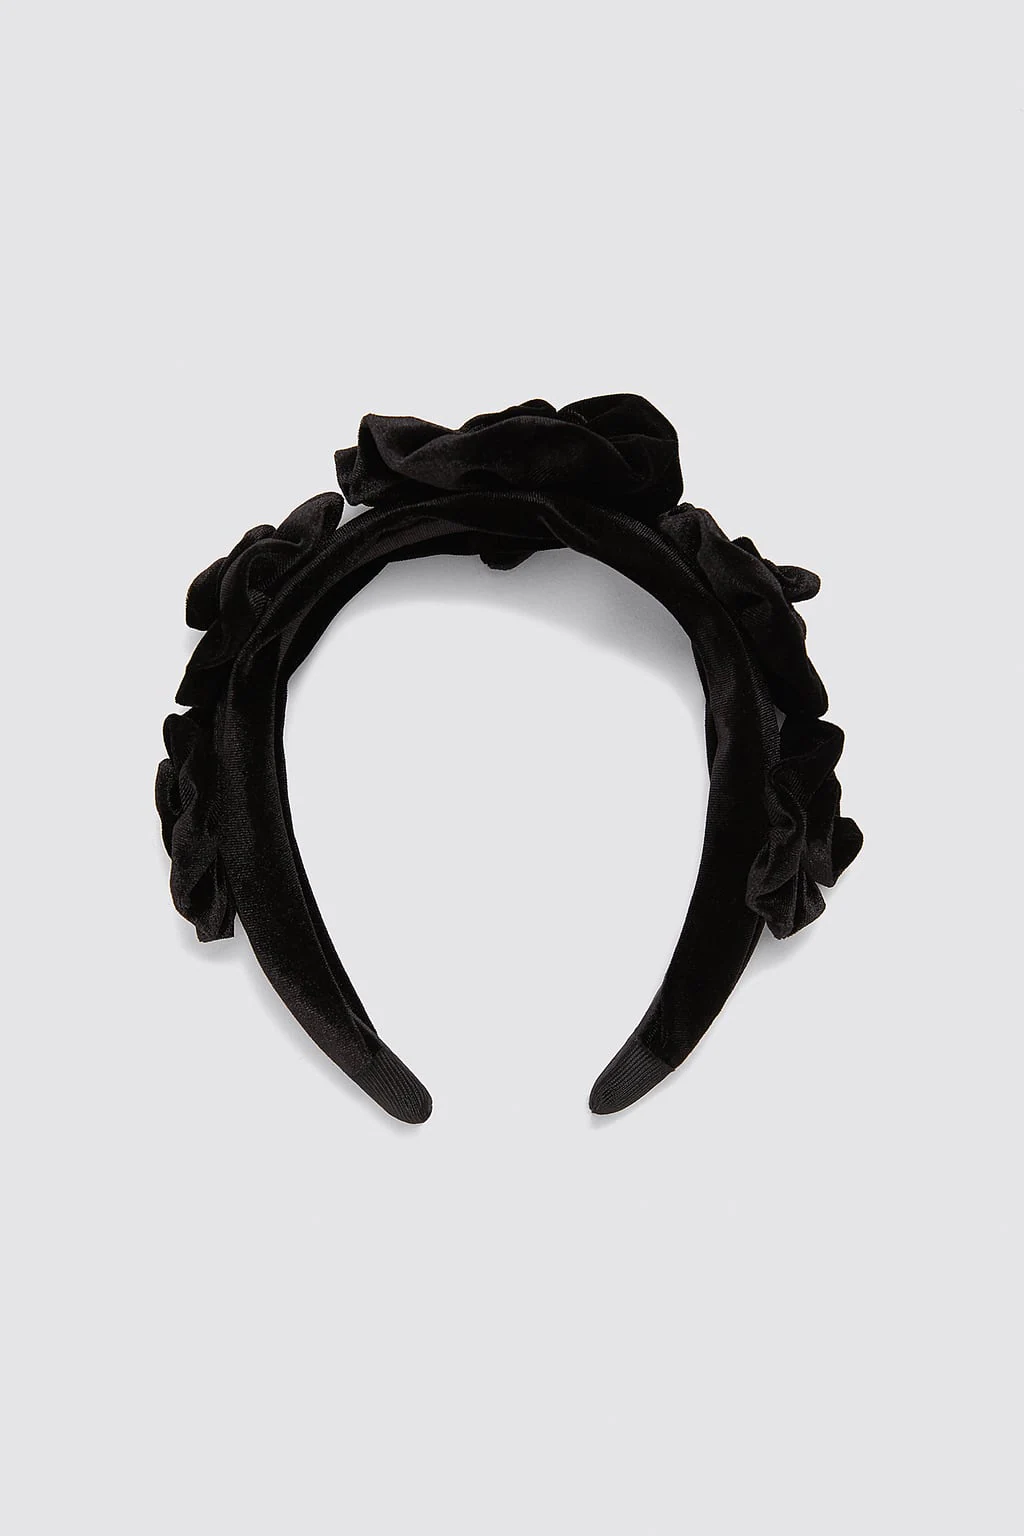 En terciopelo negro, con flores en relieve de Zara.